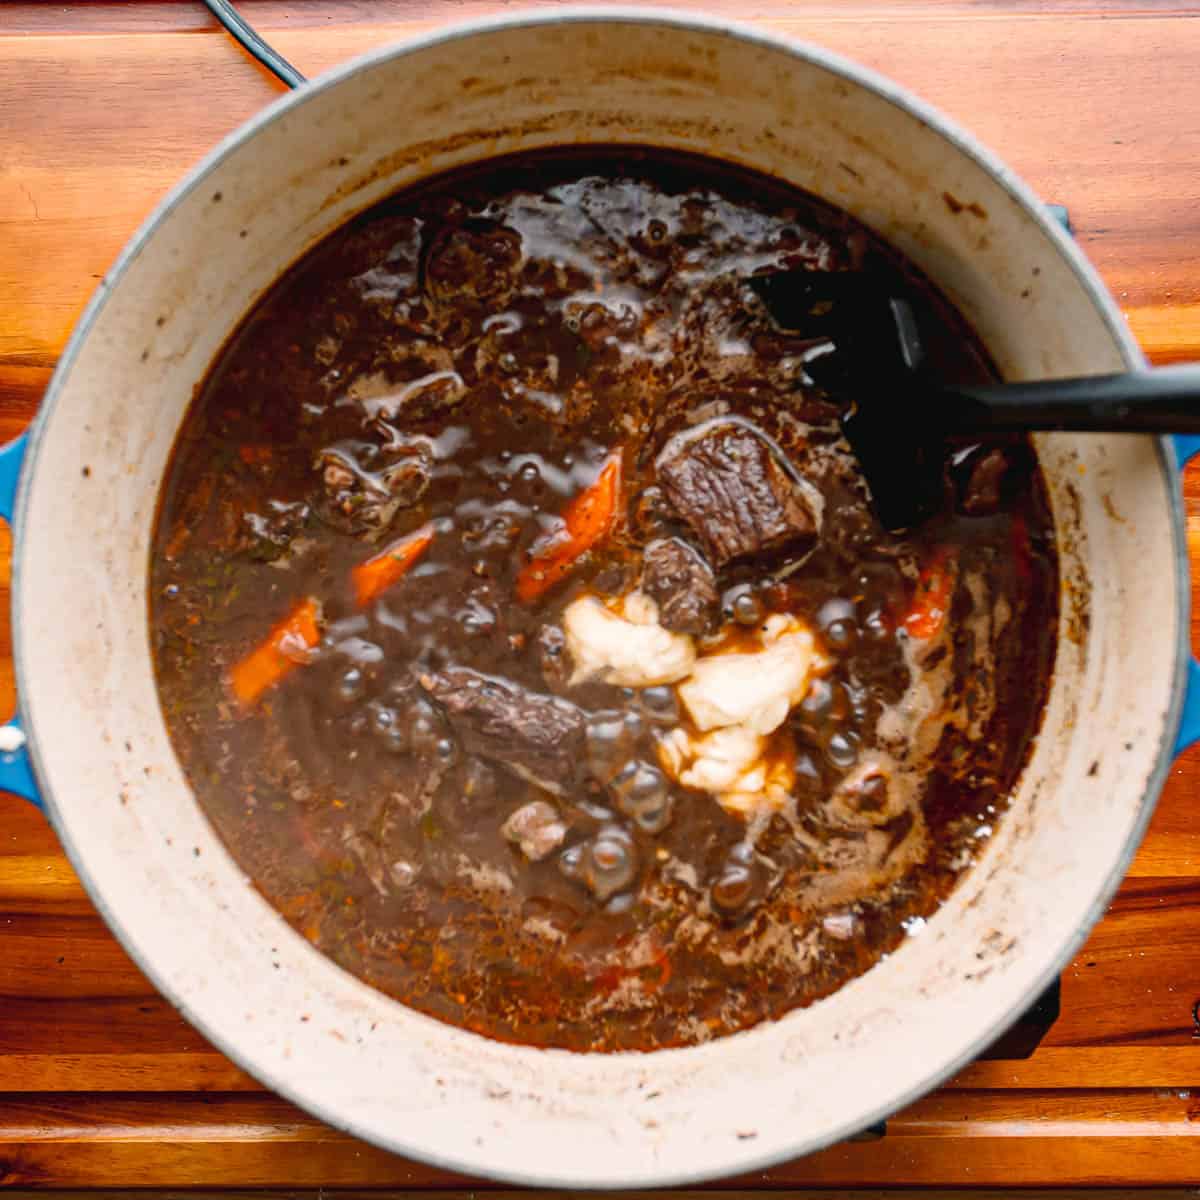 thicken the stew sauce with Beurre Manie.